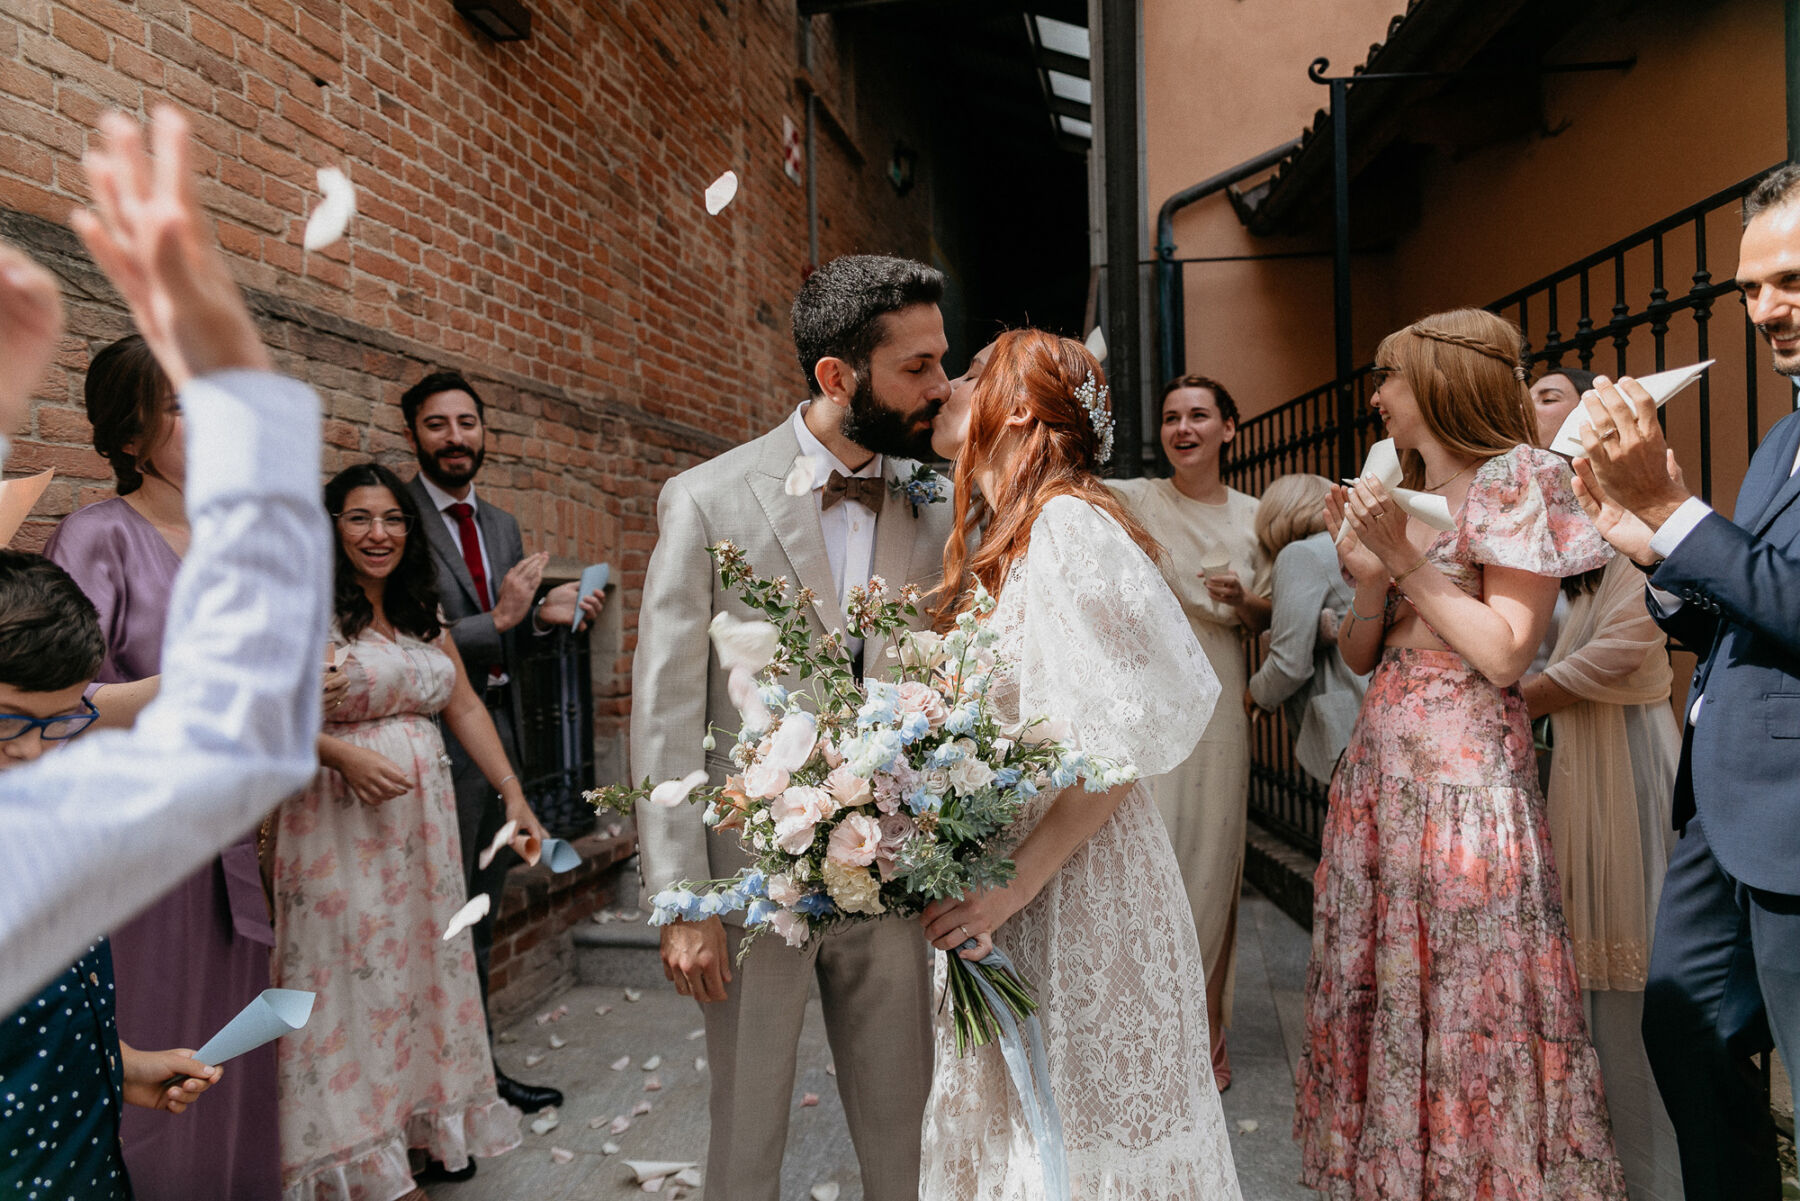 Bride and groom kissing at Italian wedding.